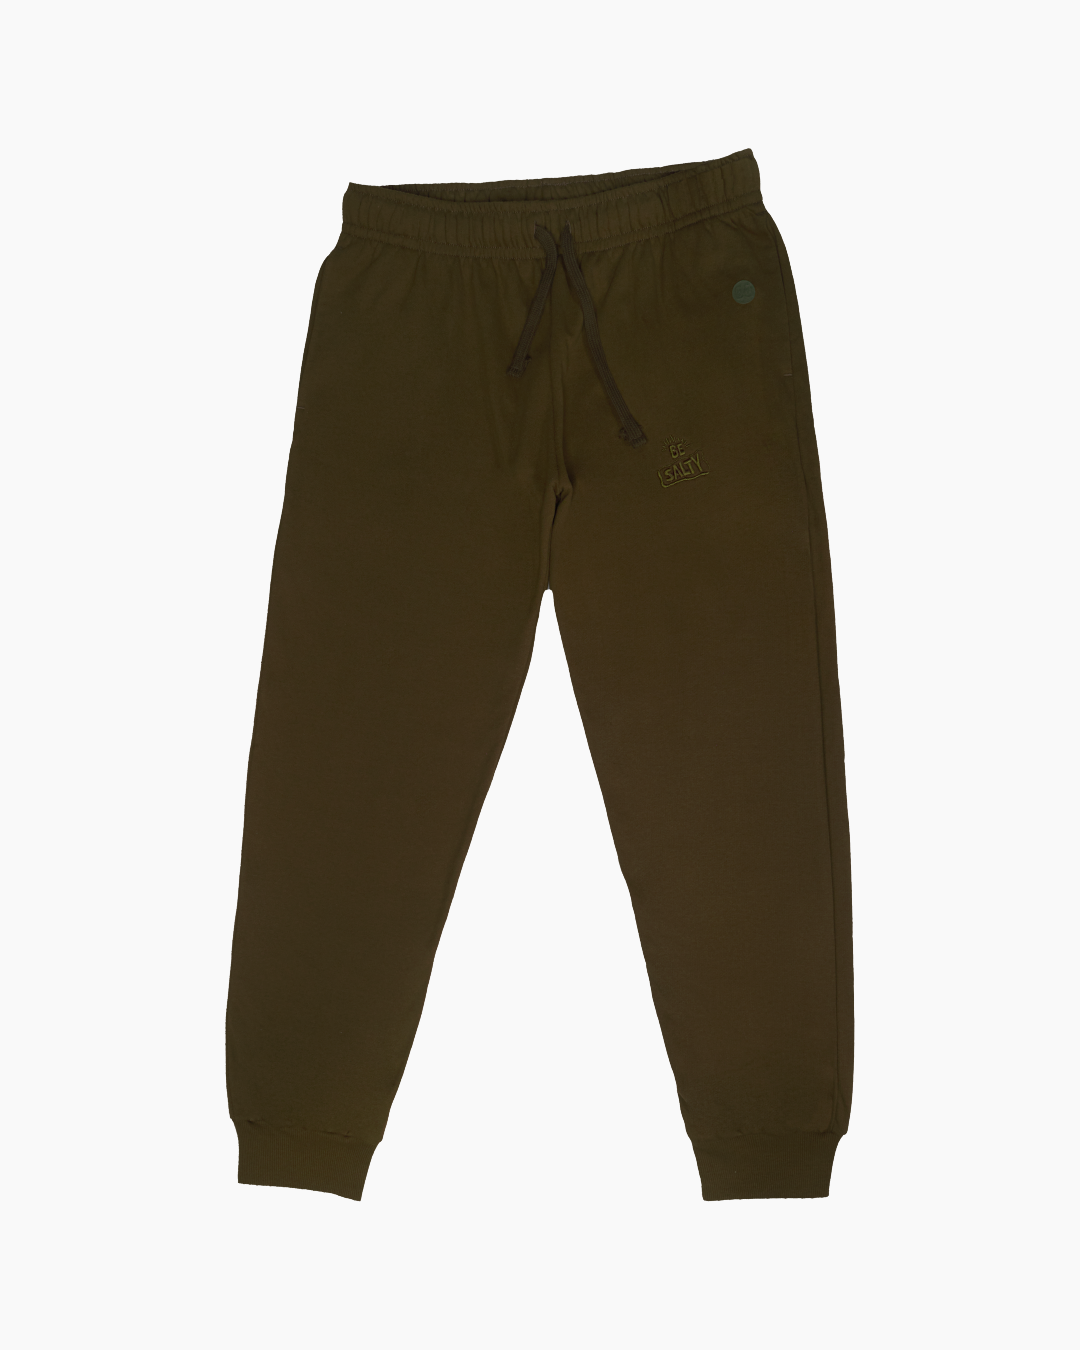 Unisex - Army Green Sweatpant